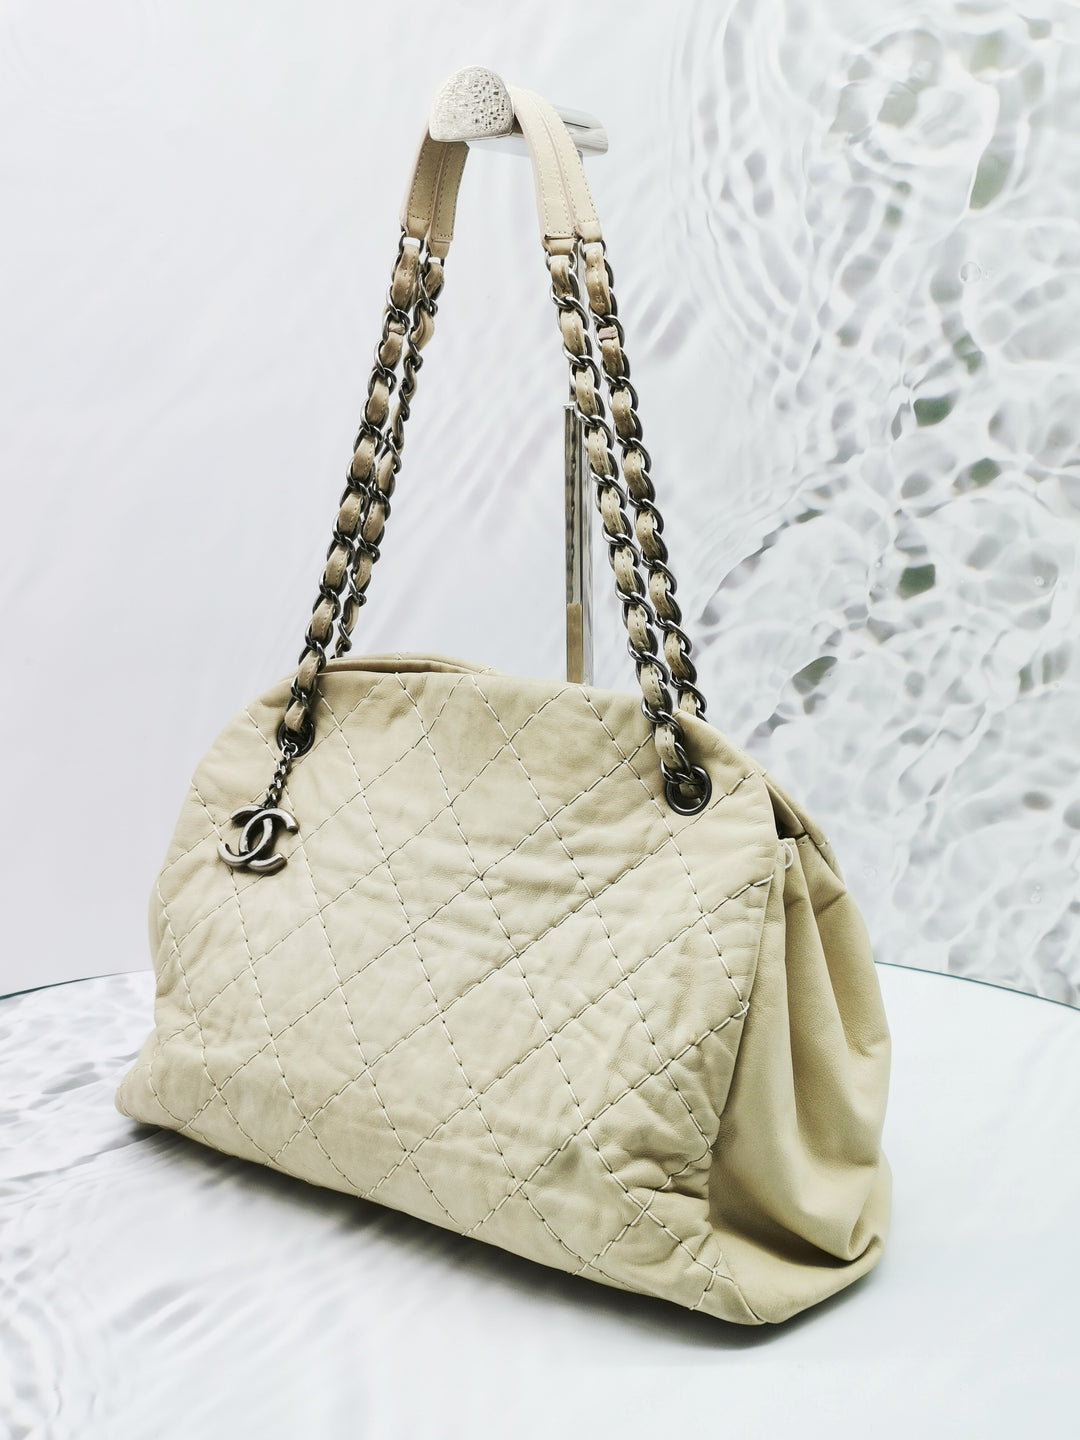 Chanel Just Mademoiselle Bag